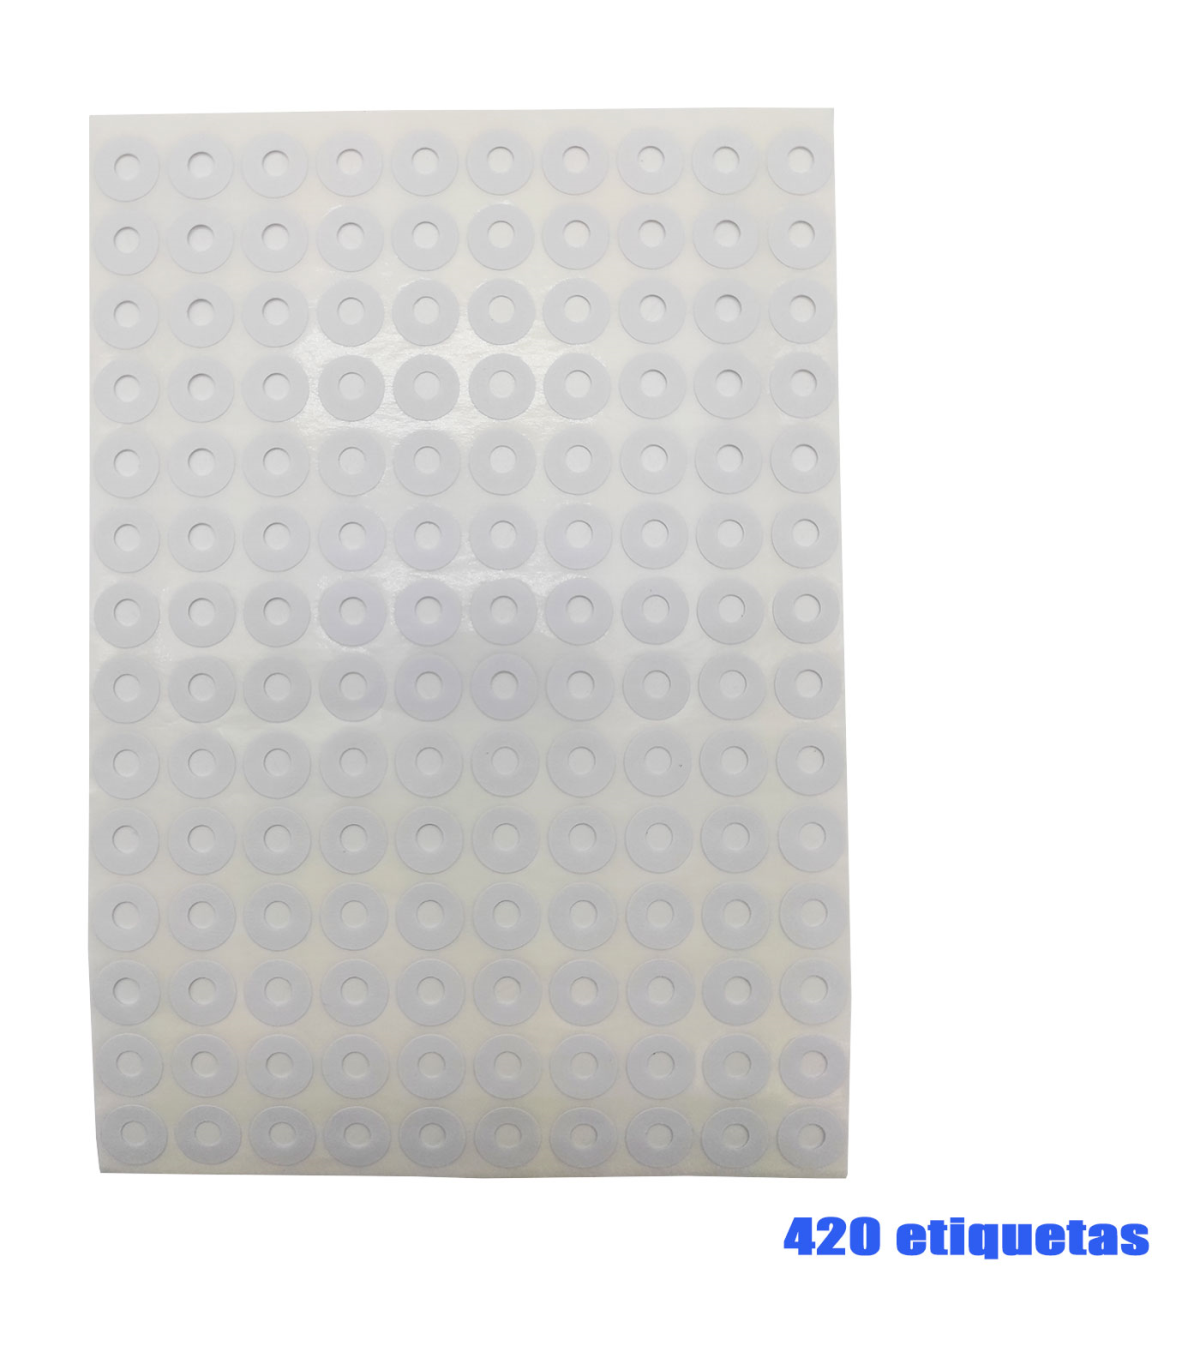 Feudo tubo respirador Primitivo Tradineur - Pack de 420 etiquetas adhesivas redondas blancas E16C, pegatinas  auto-adhesivas para objetos, hogar, oficina, Ø13 x